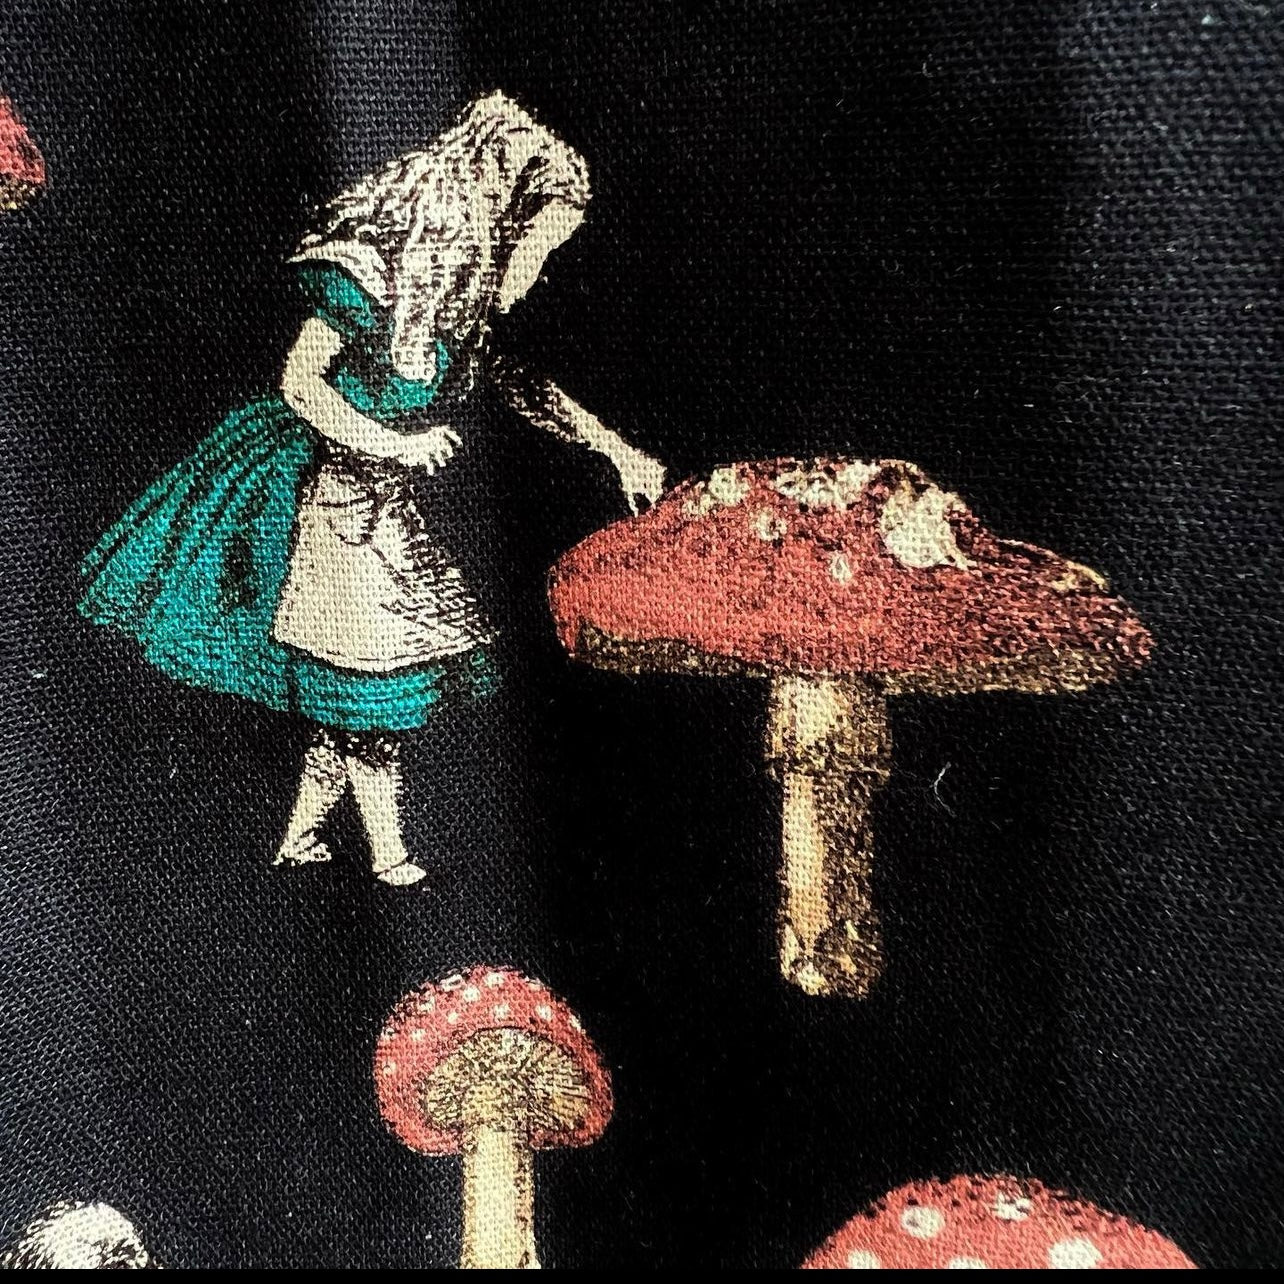 Alice in wonderland and mushroom one piece